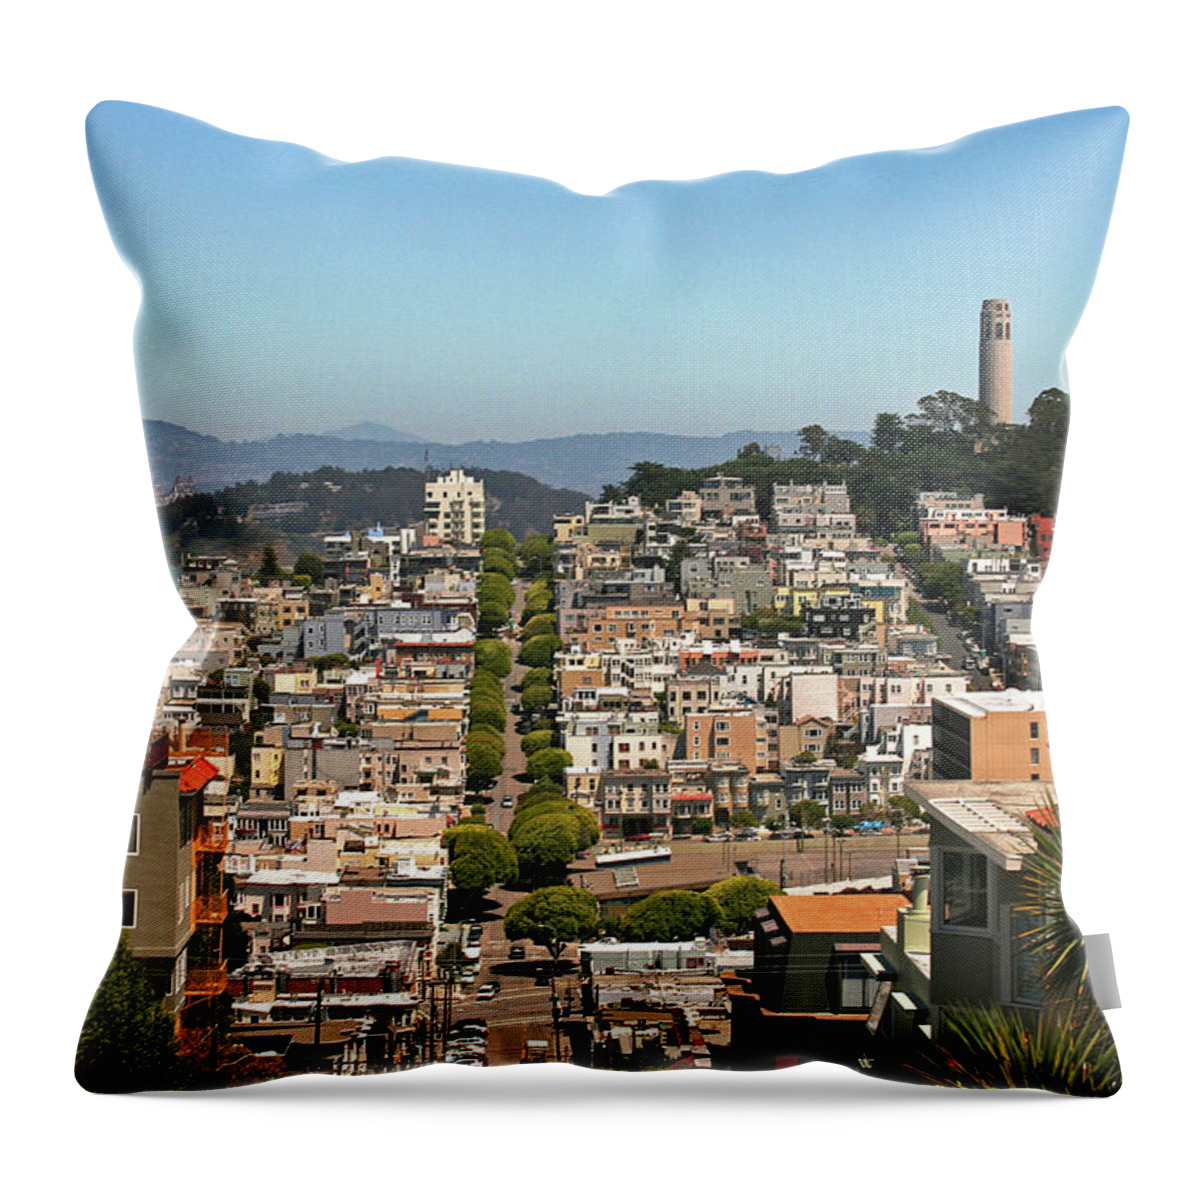 San Francisco Throw Pillow featuring the photograph San Francisco - Telegraph Hill by Richard Krebs